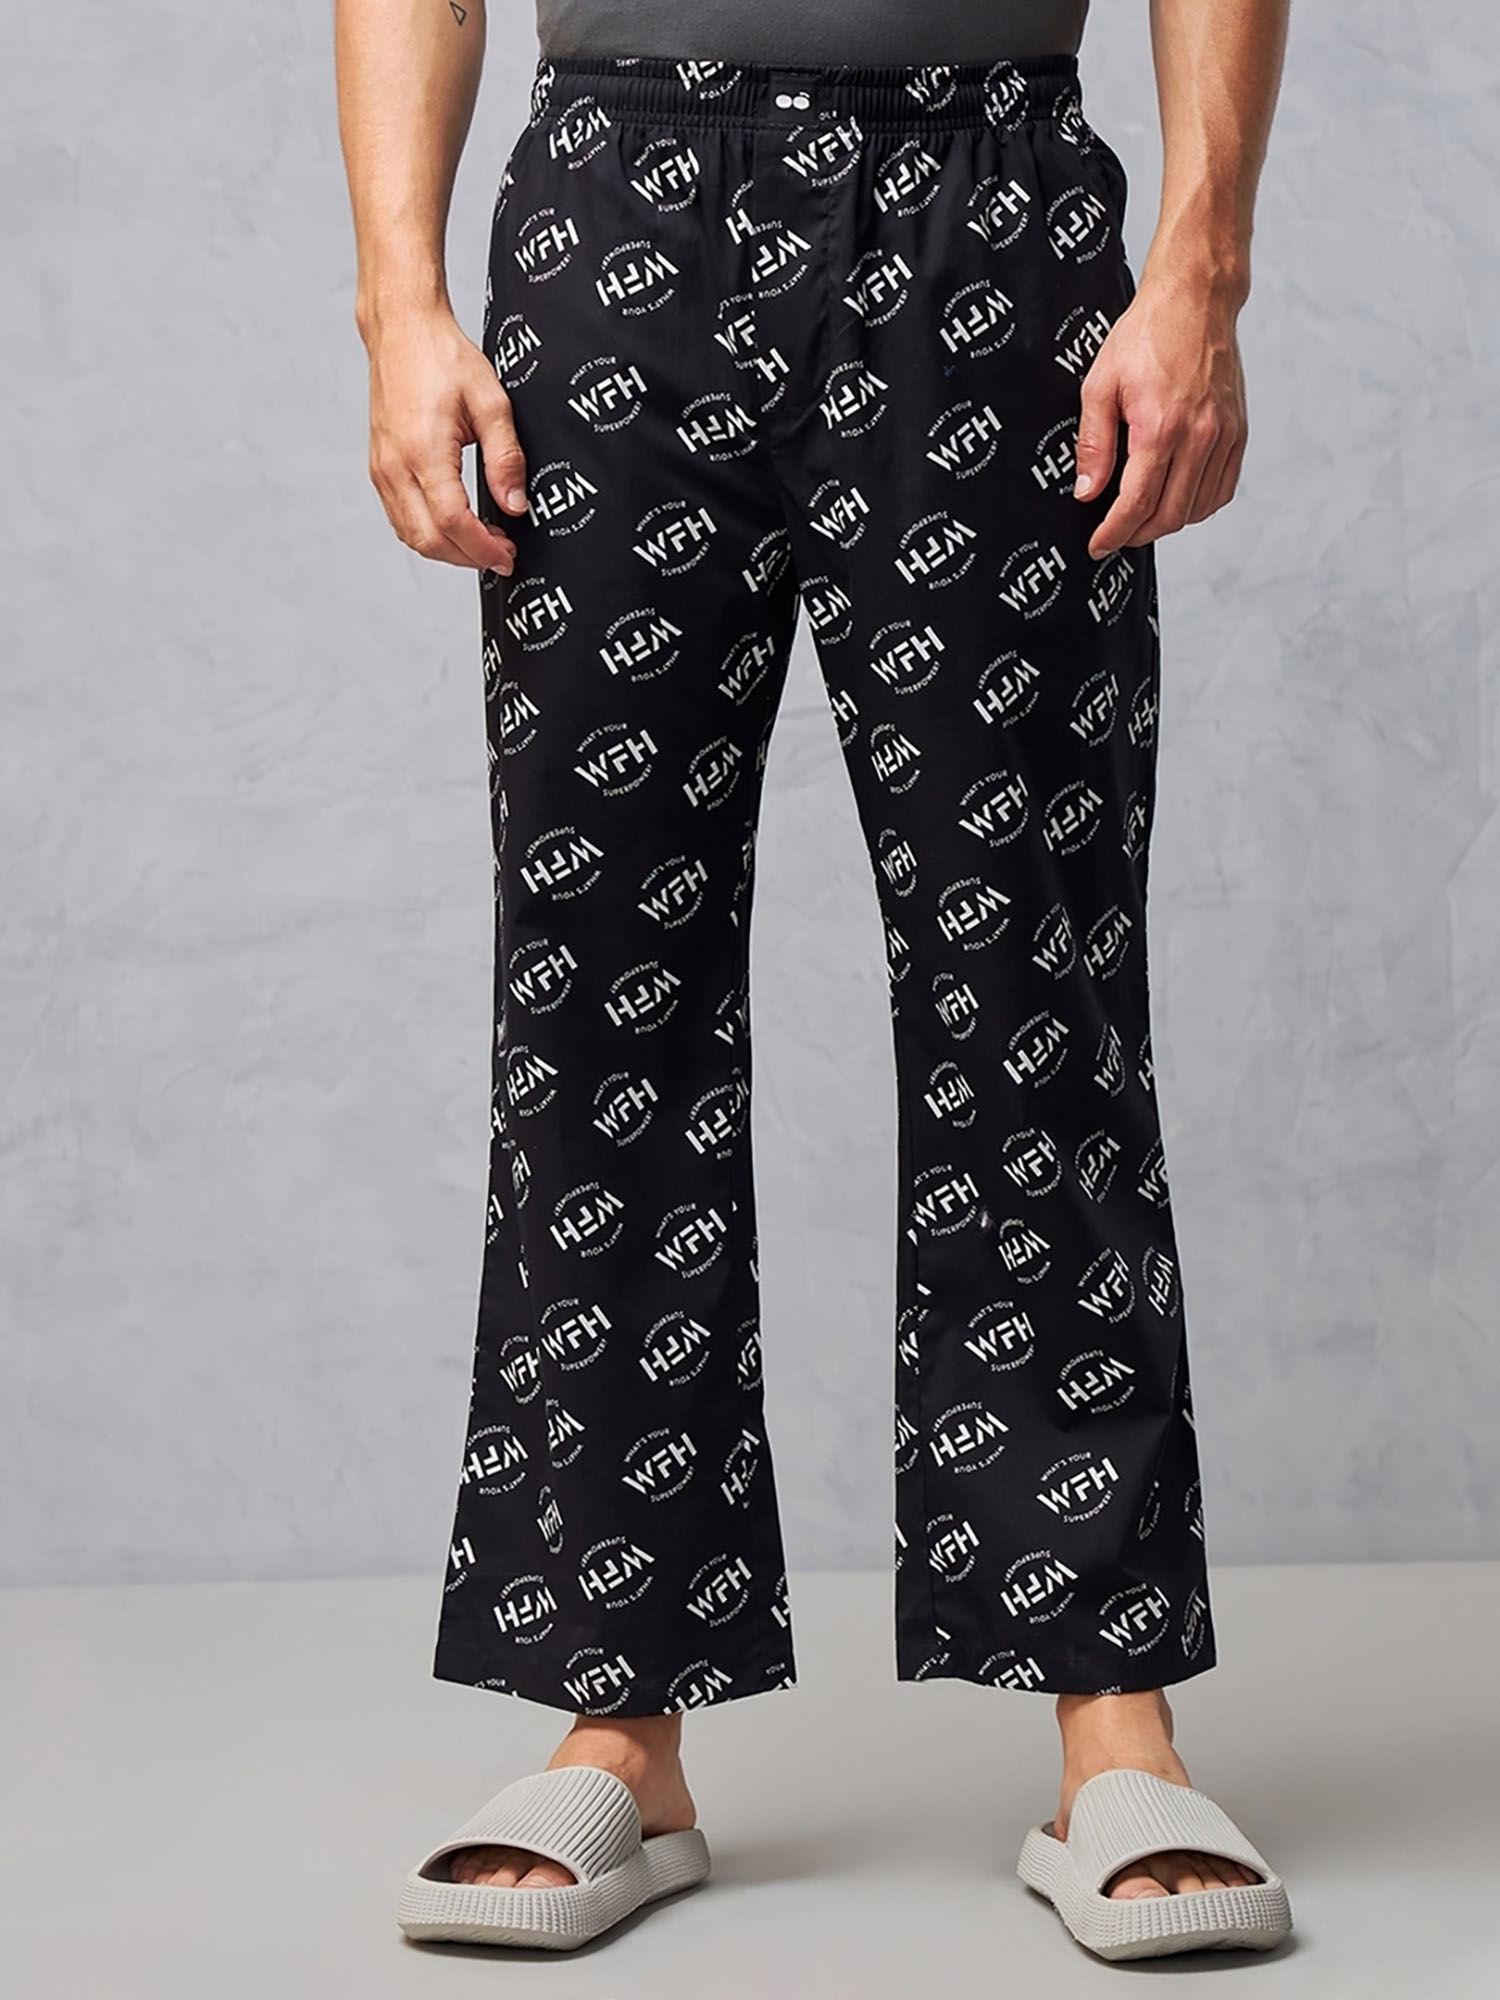 mens black all over printed oversized pyjamas